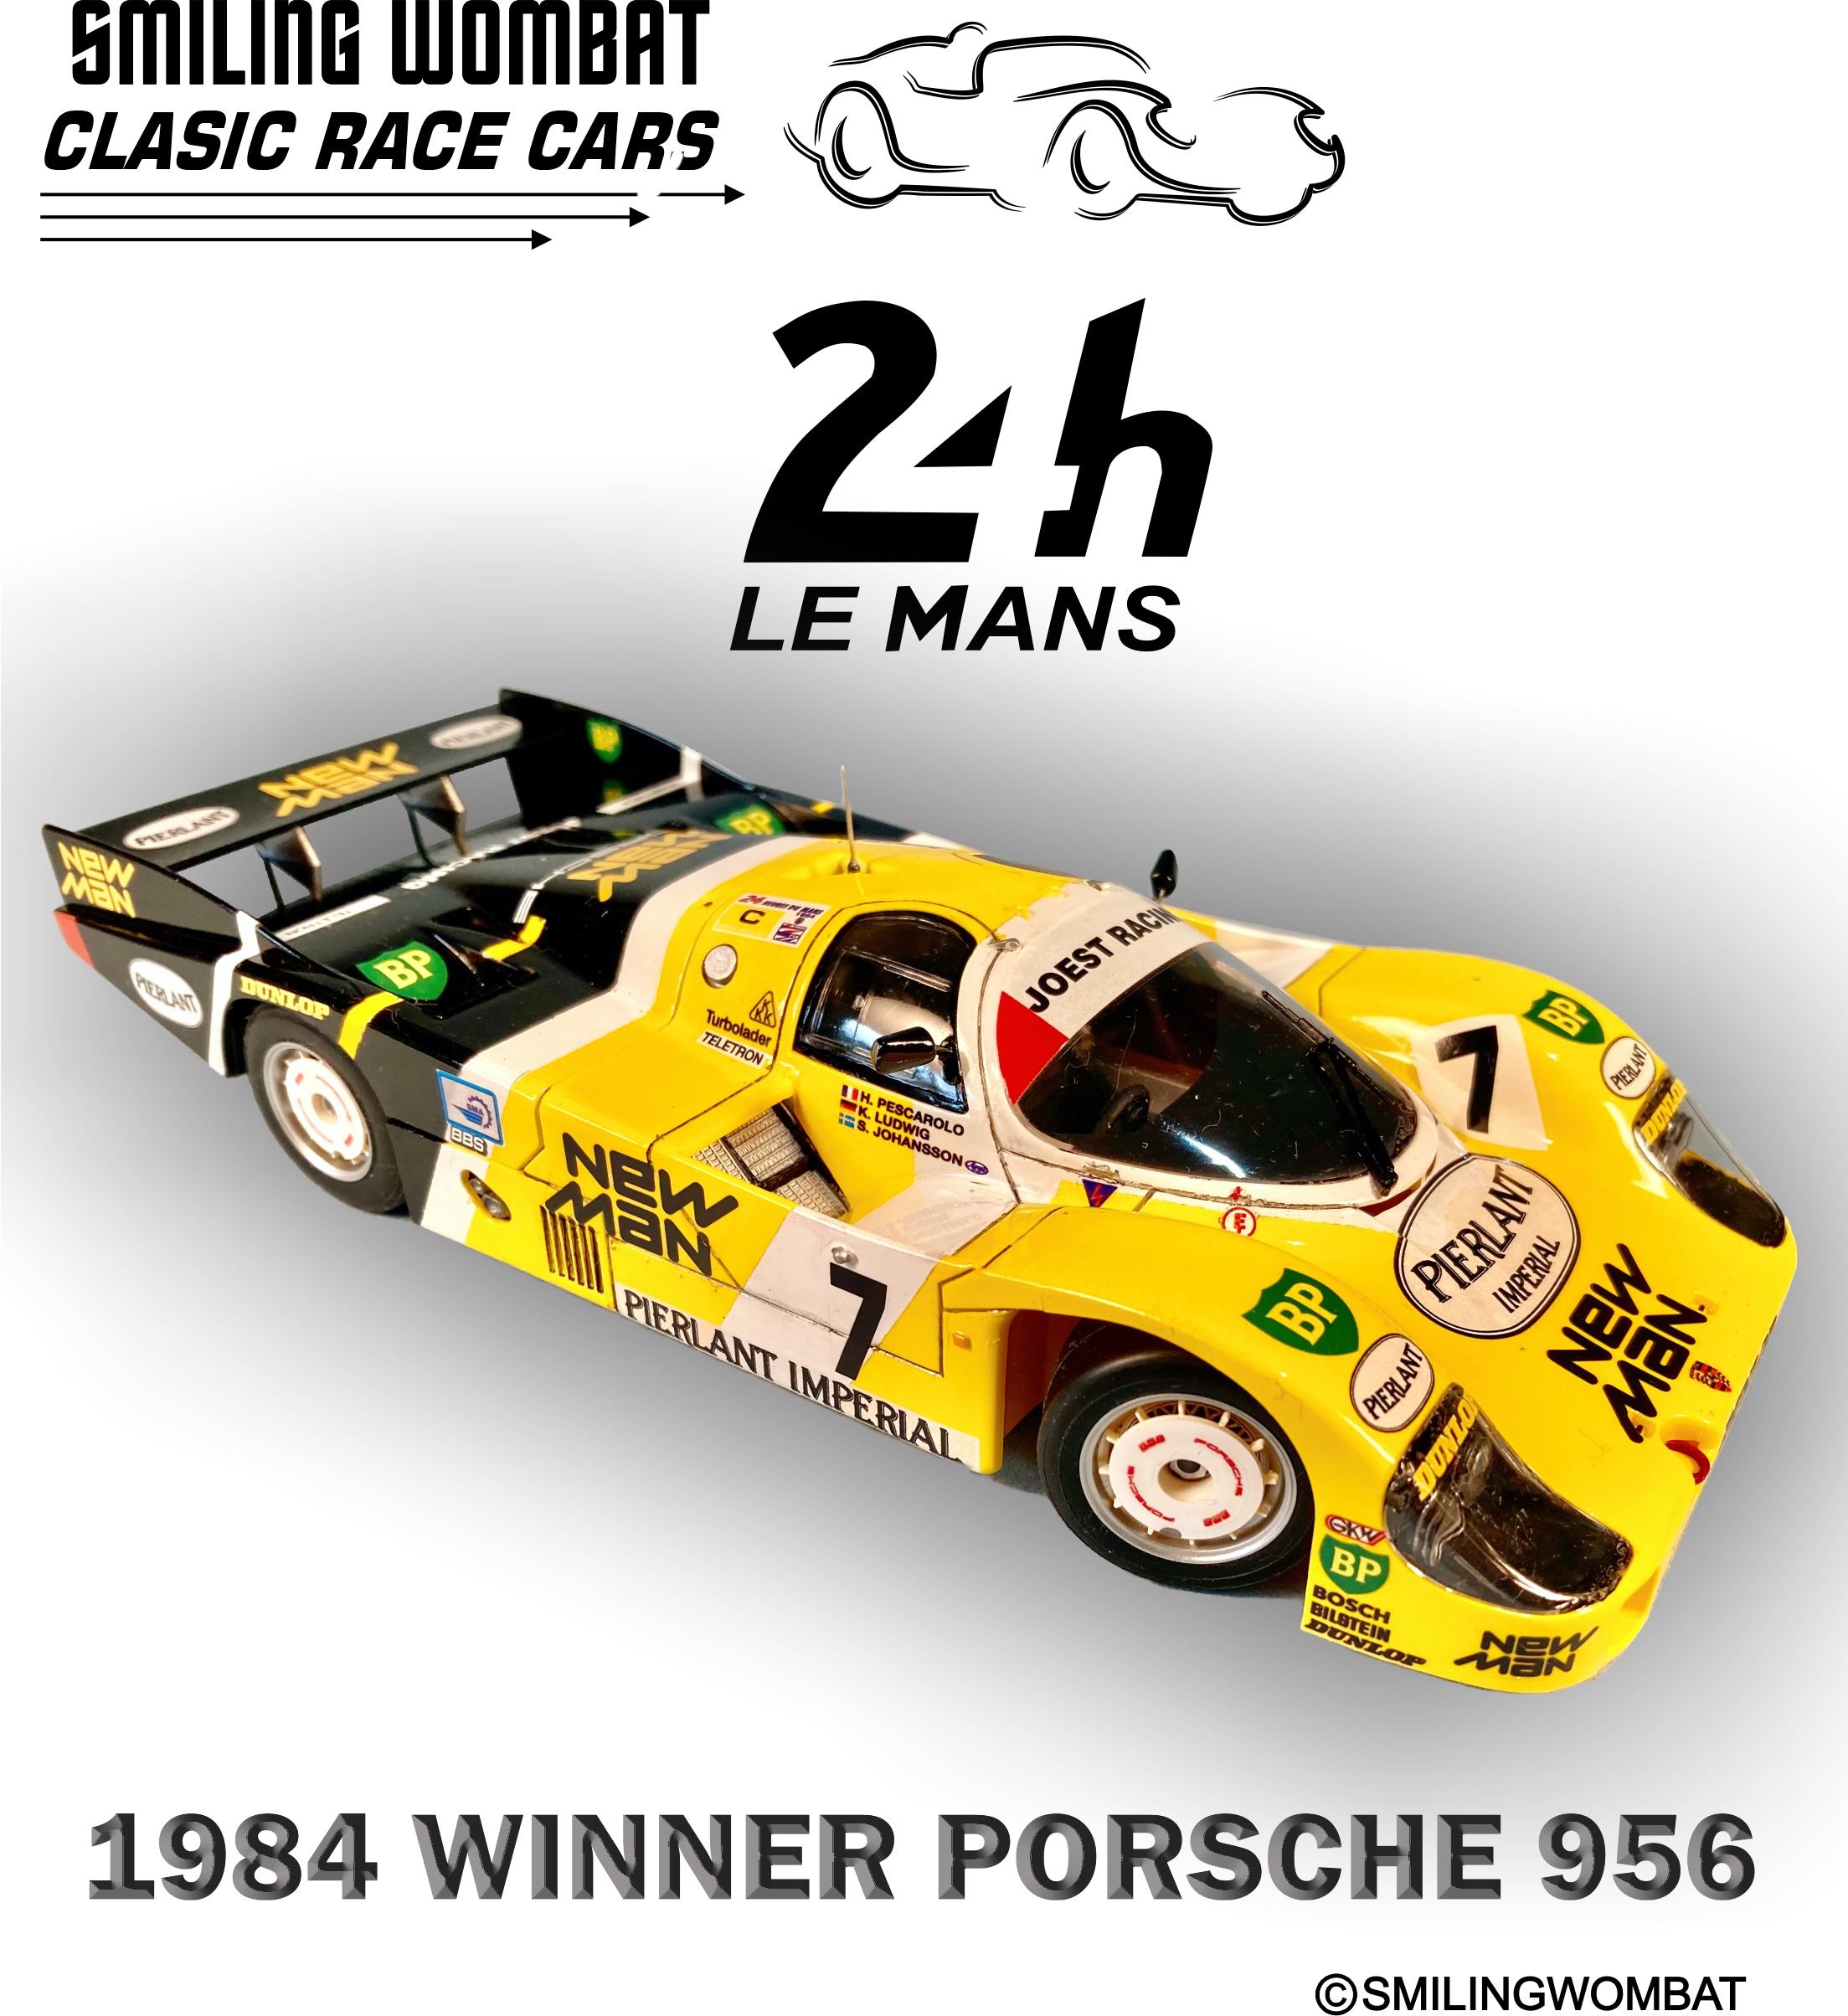 1984 Porsche 956 from Smiling Wombat